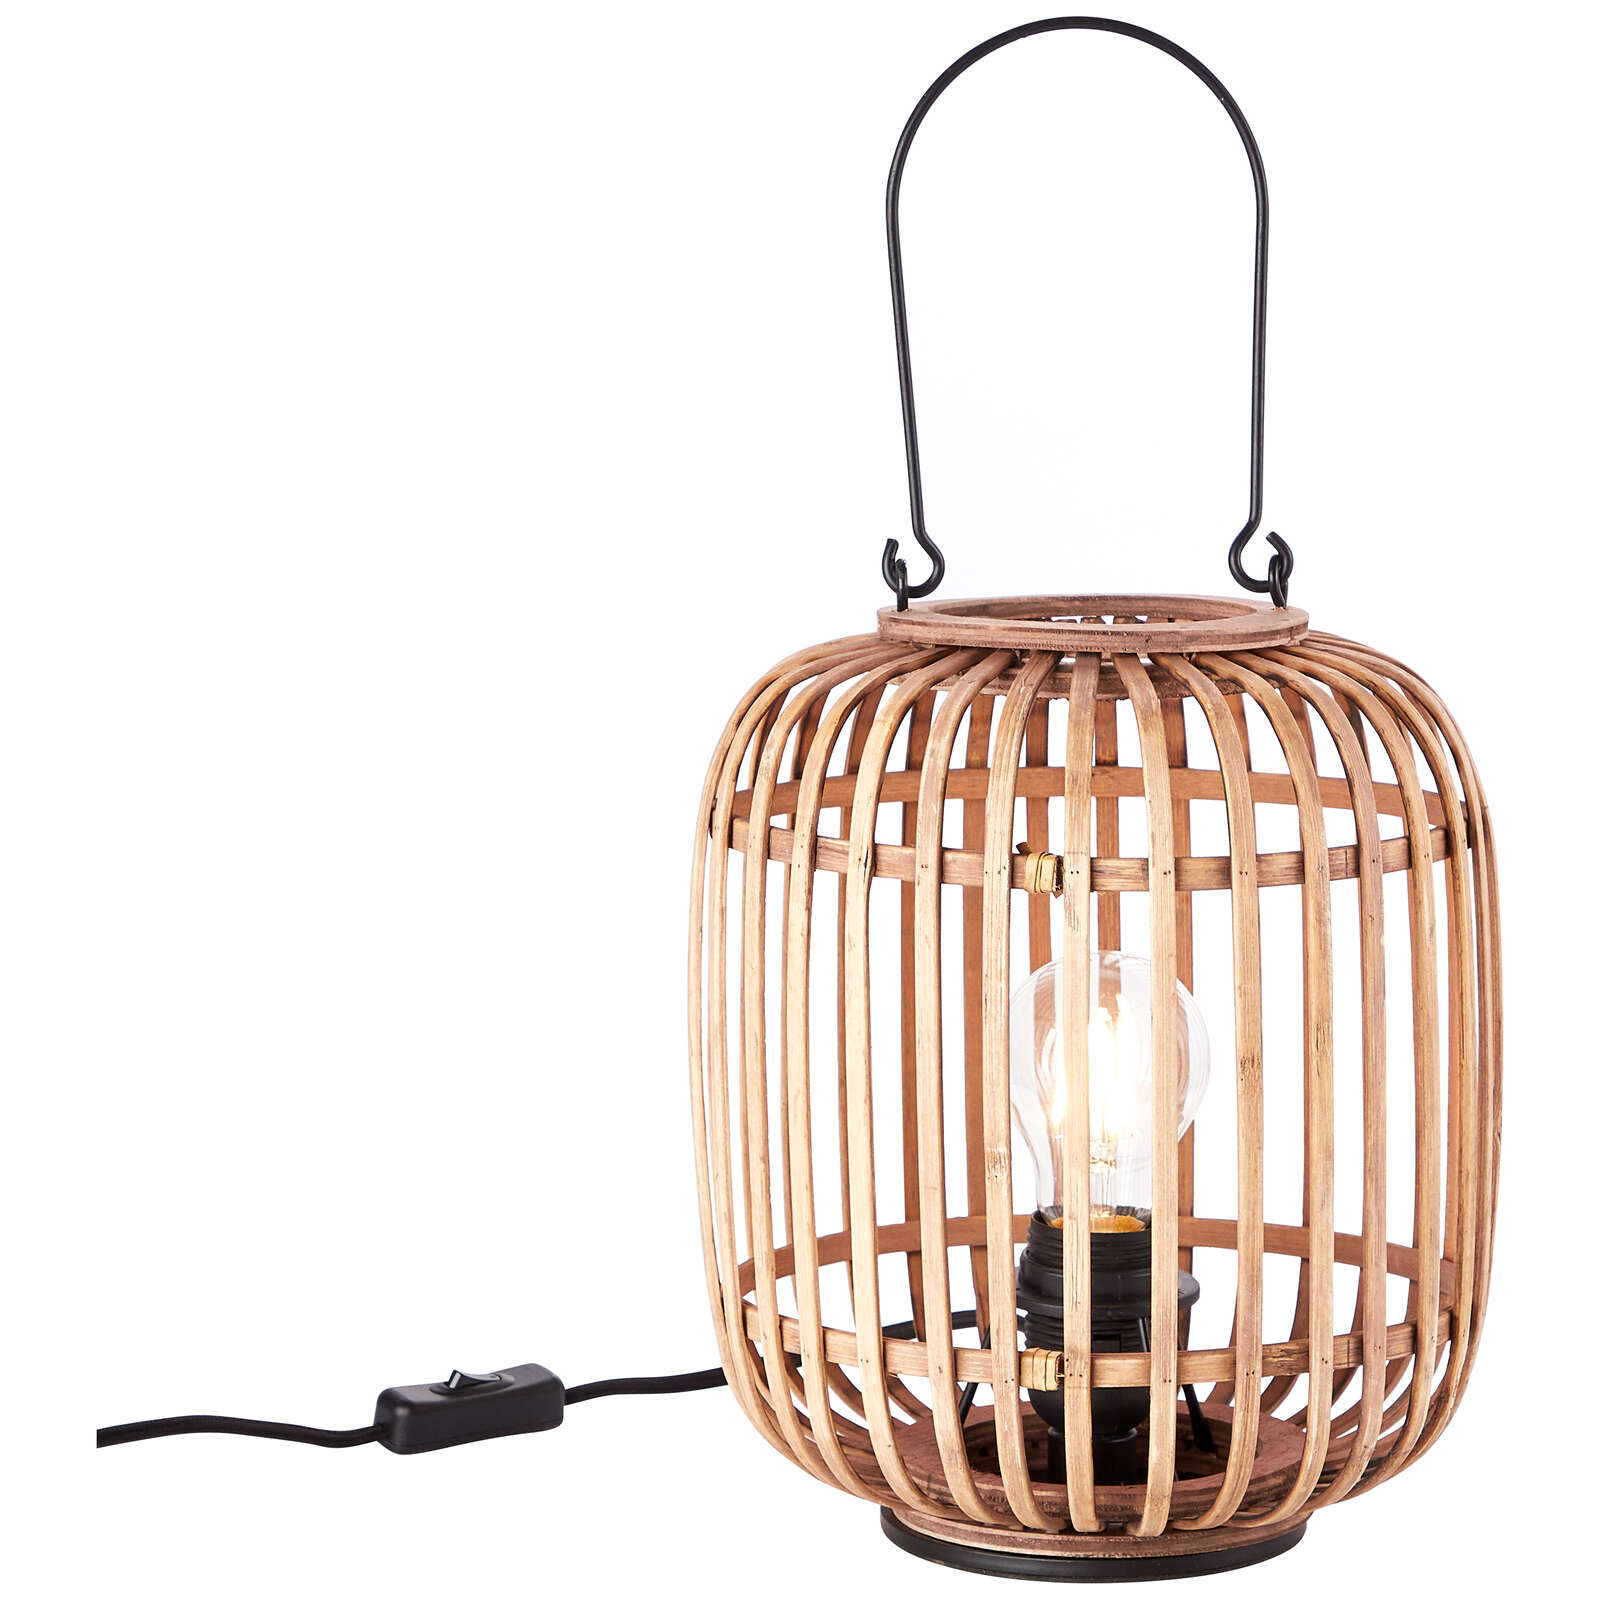             Bamboo table lamp - Willi 14 - Brown
        